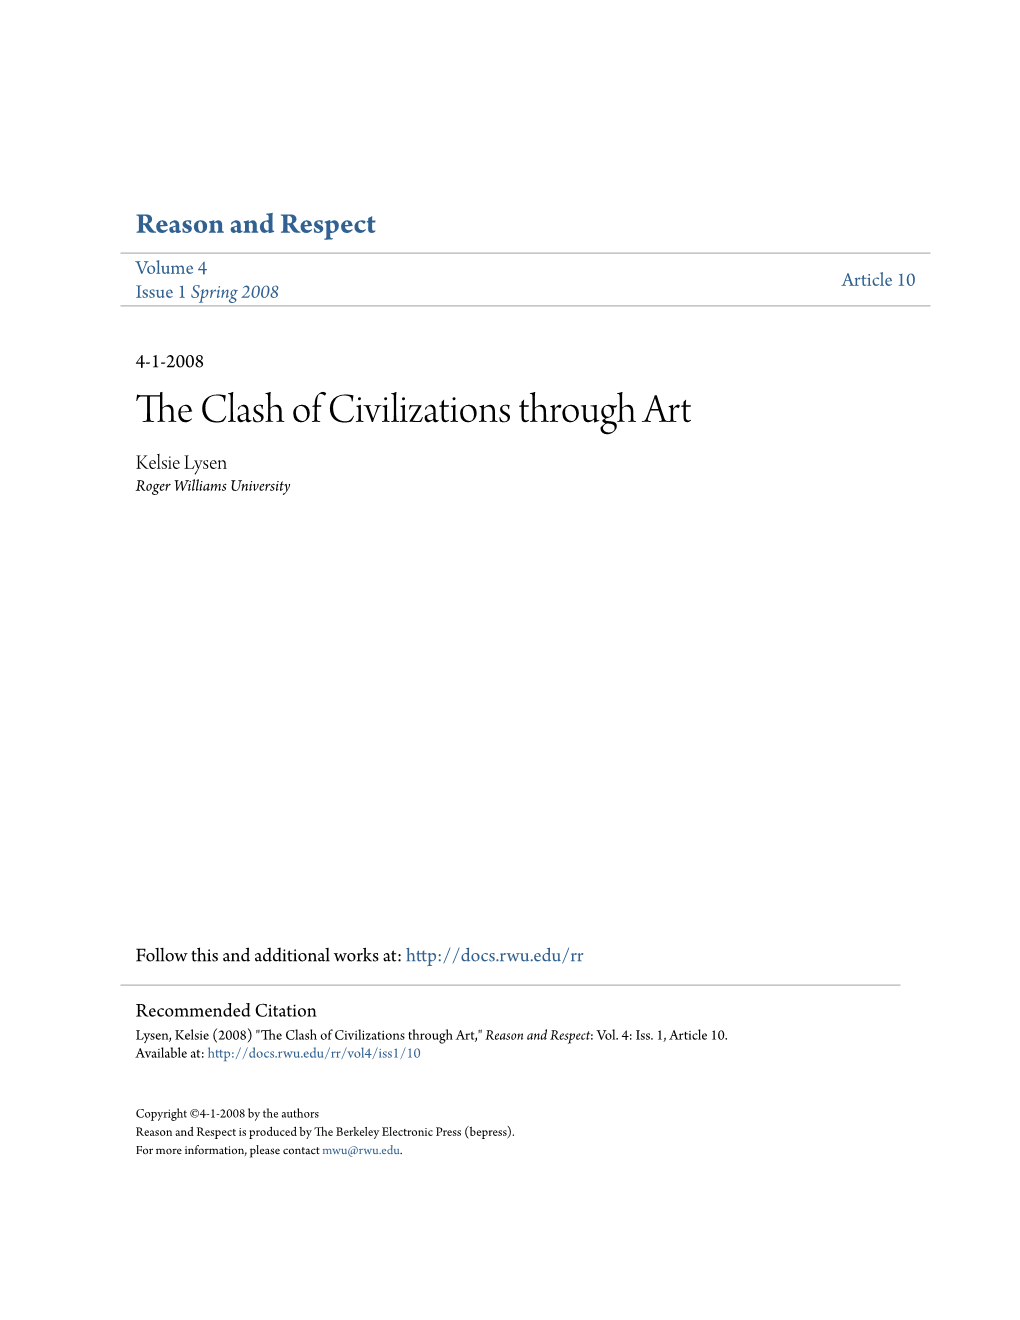 The Clash of Civilizations Through Art